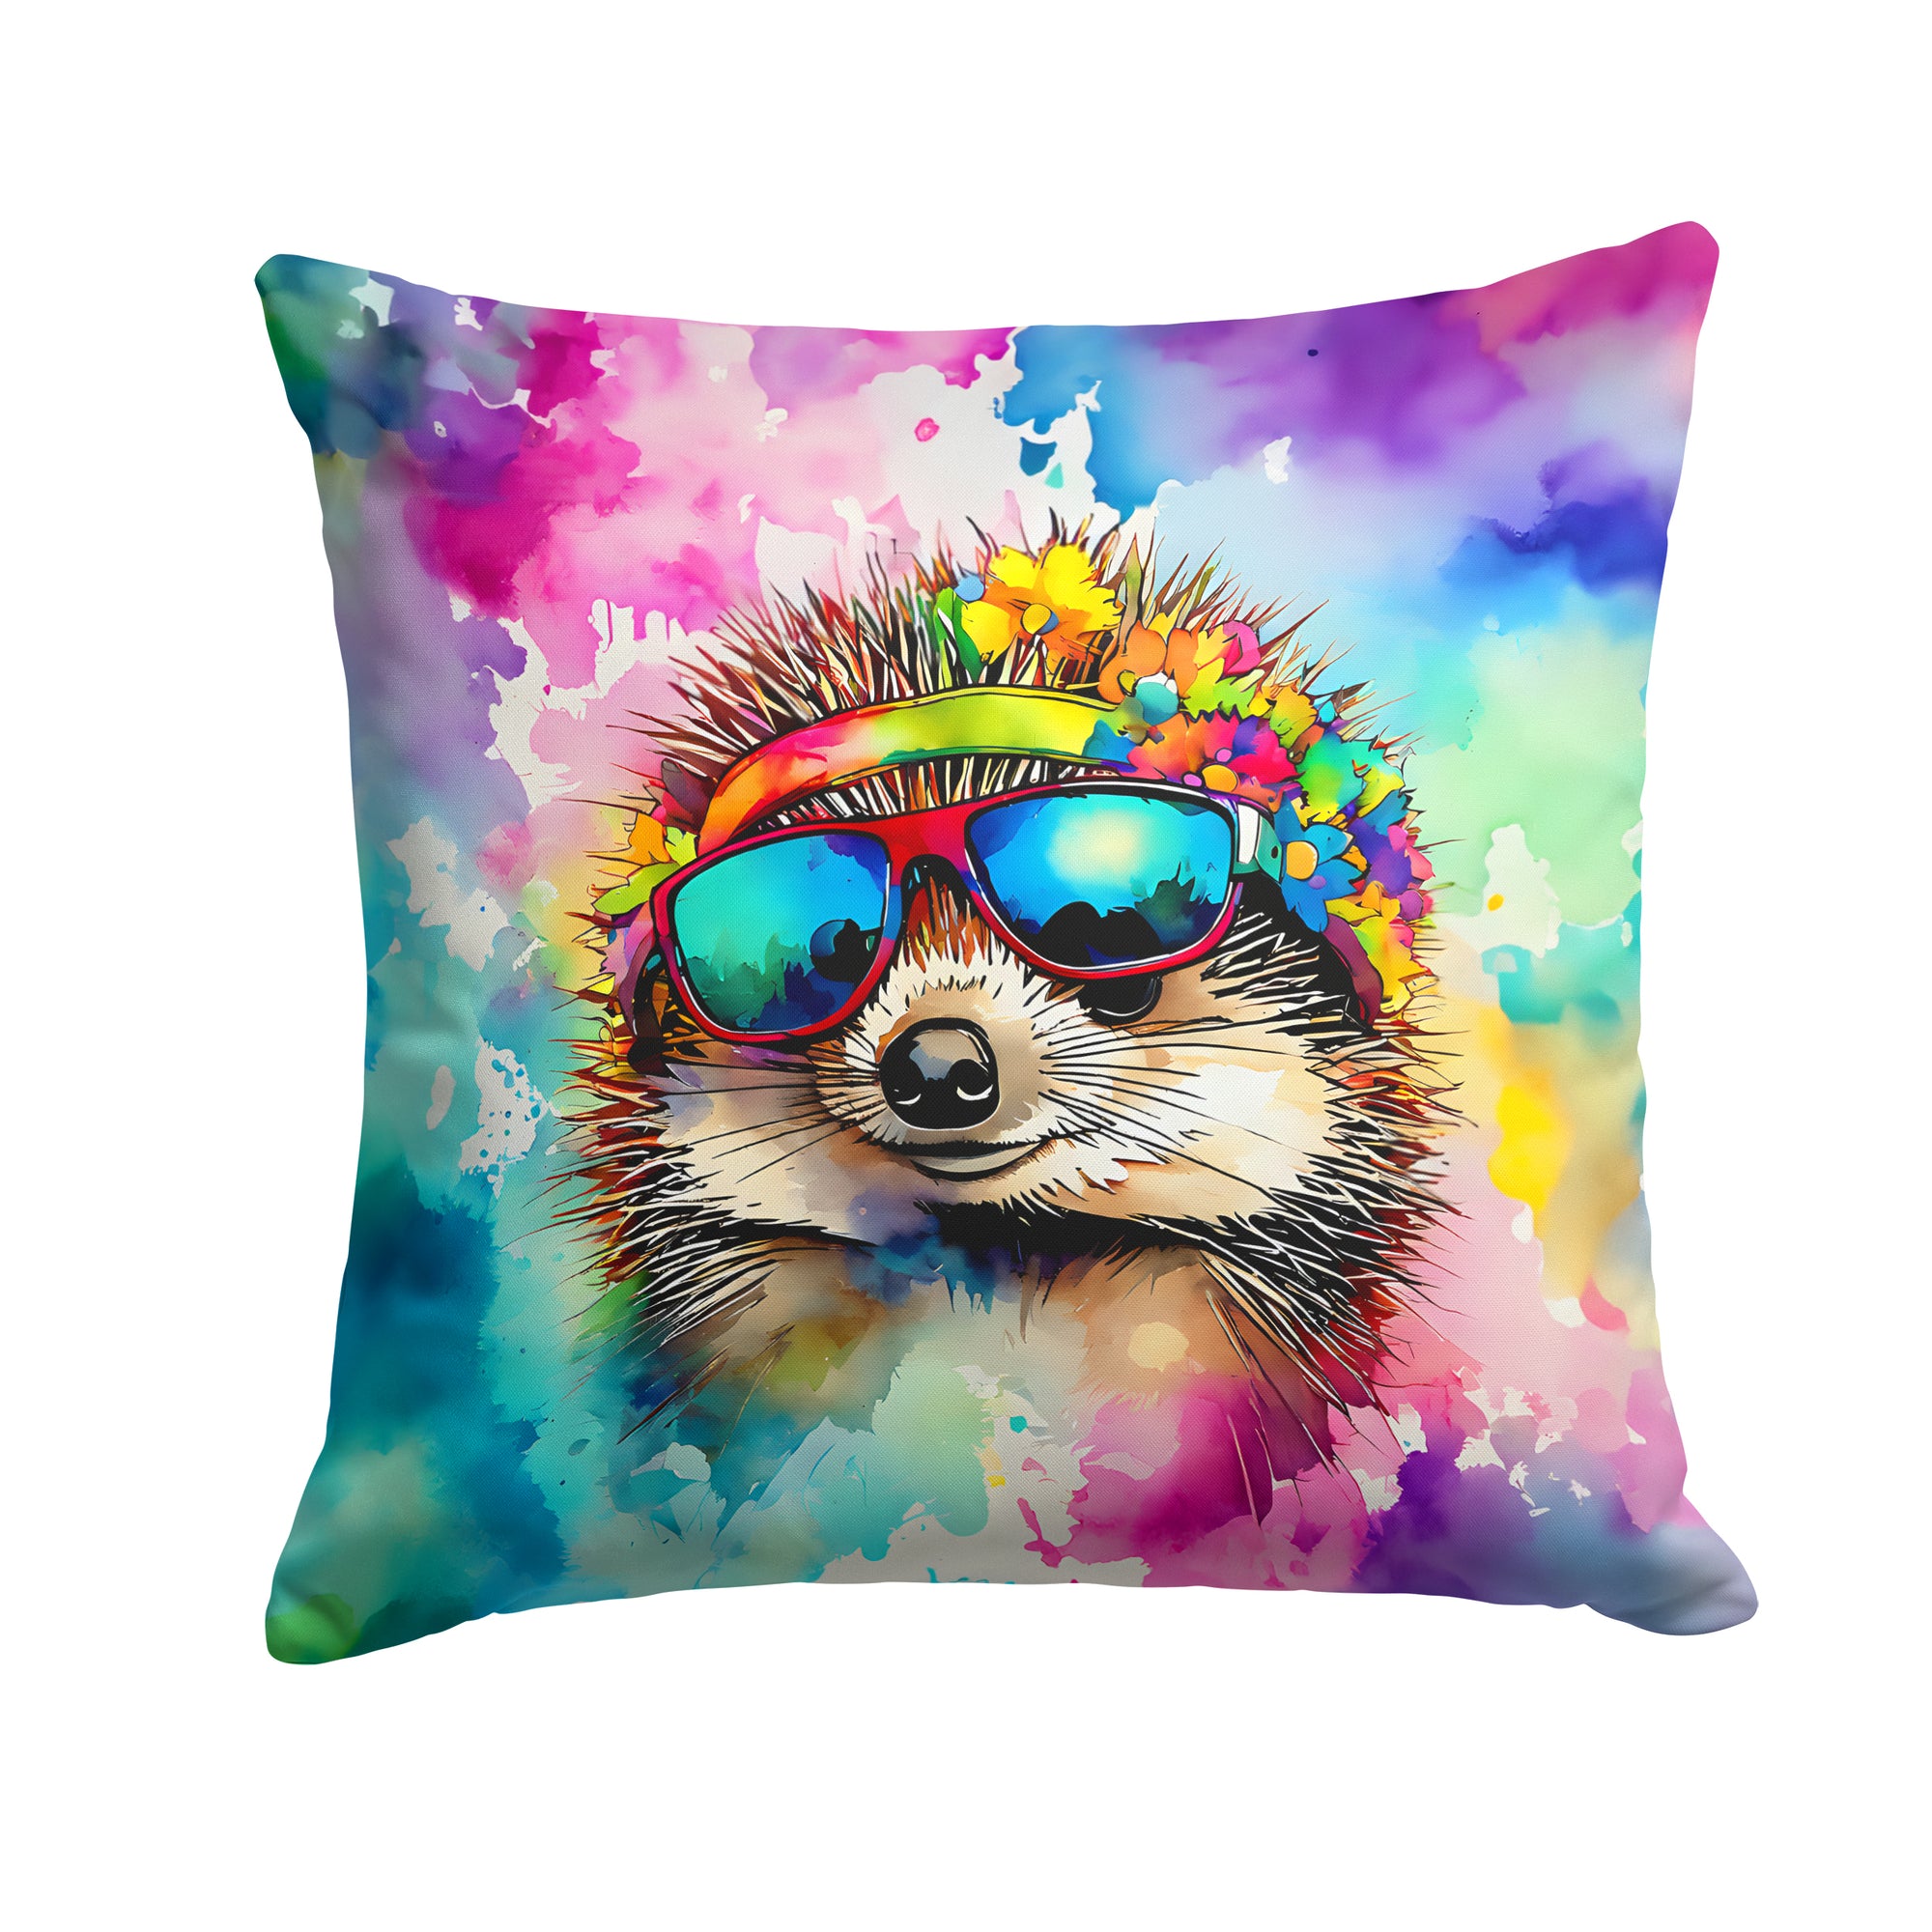 Buy this Hippie Animal Hedgehog Throw Pillow